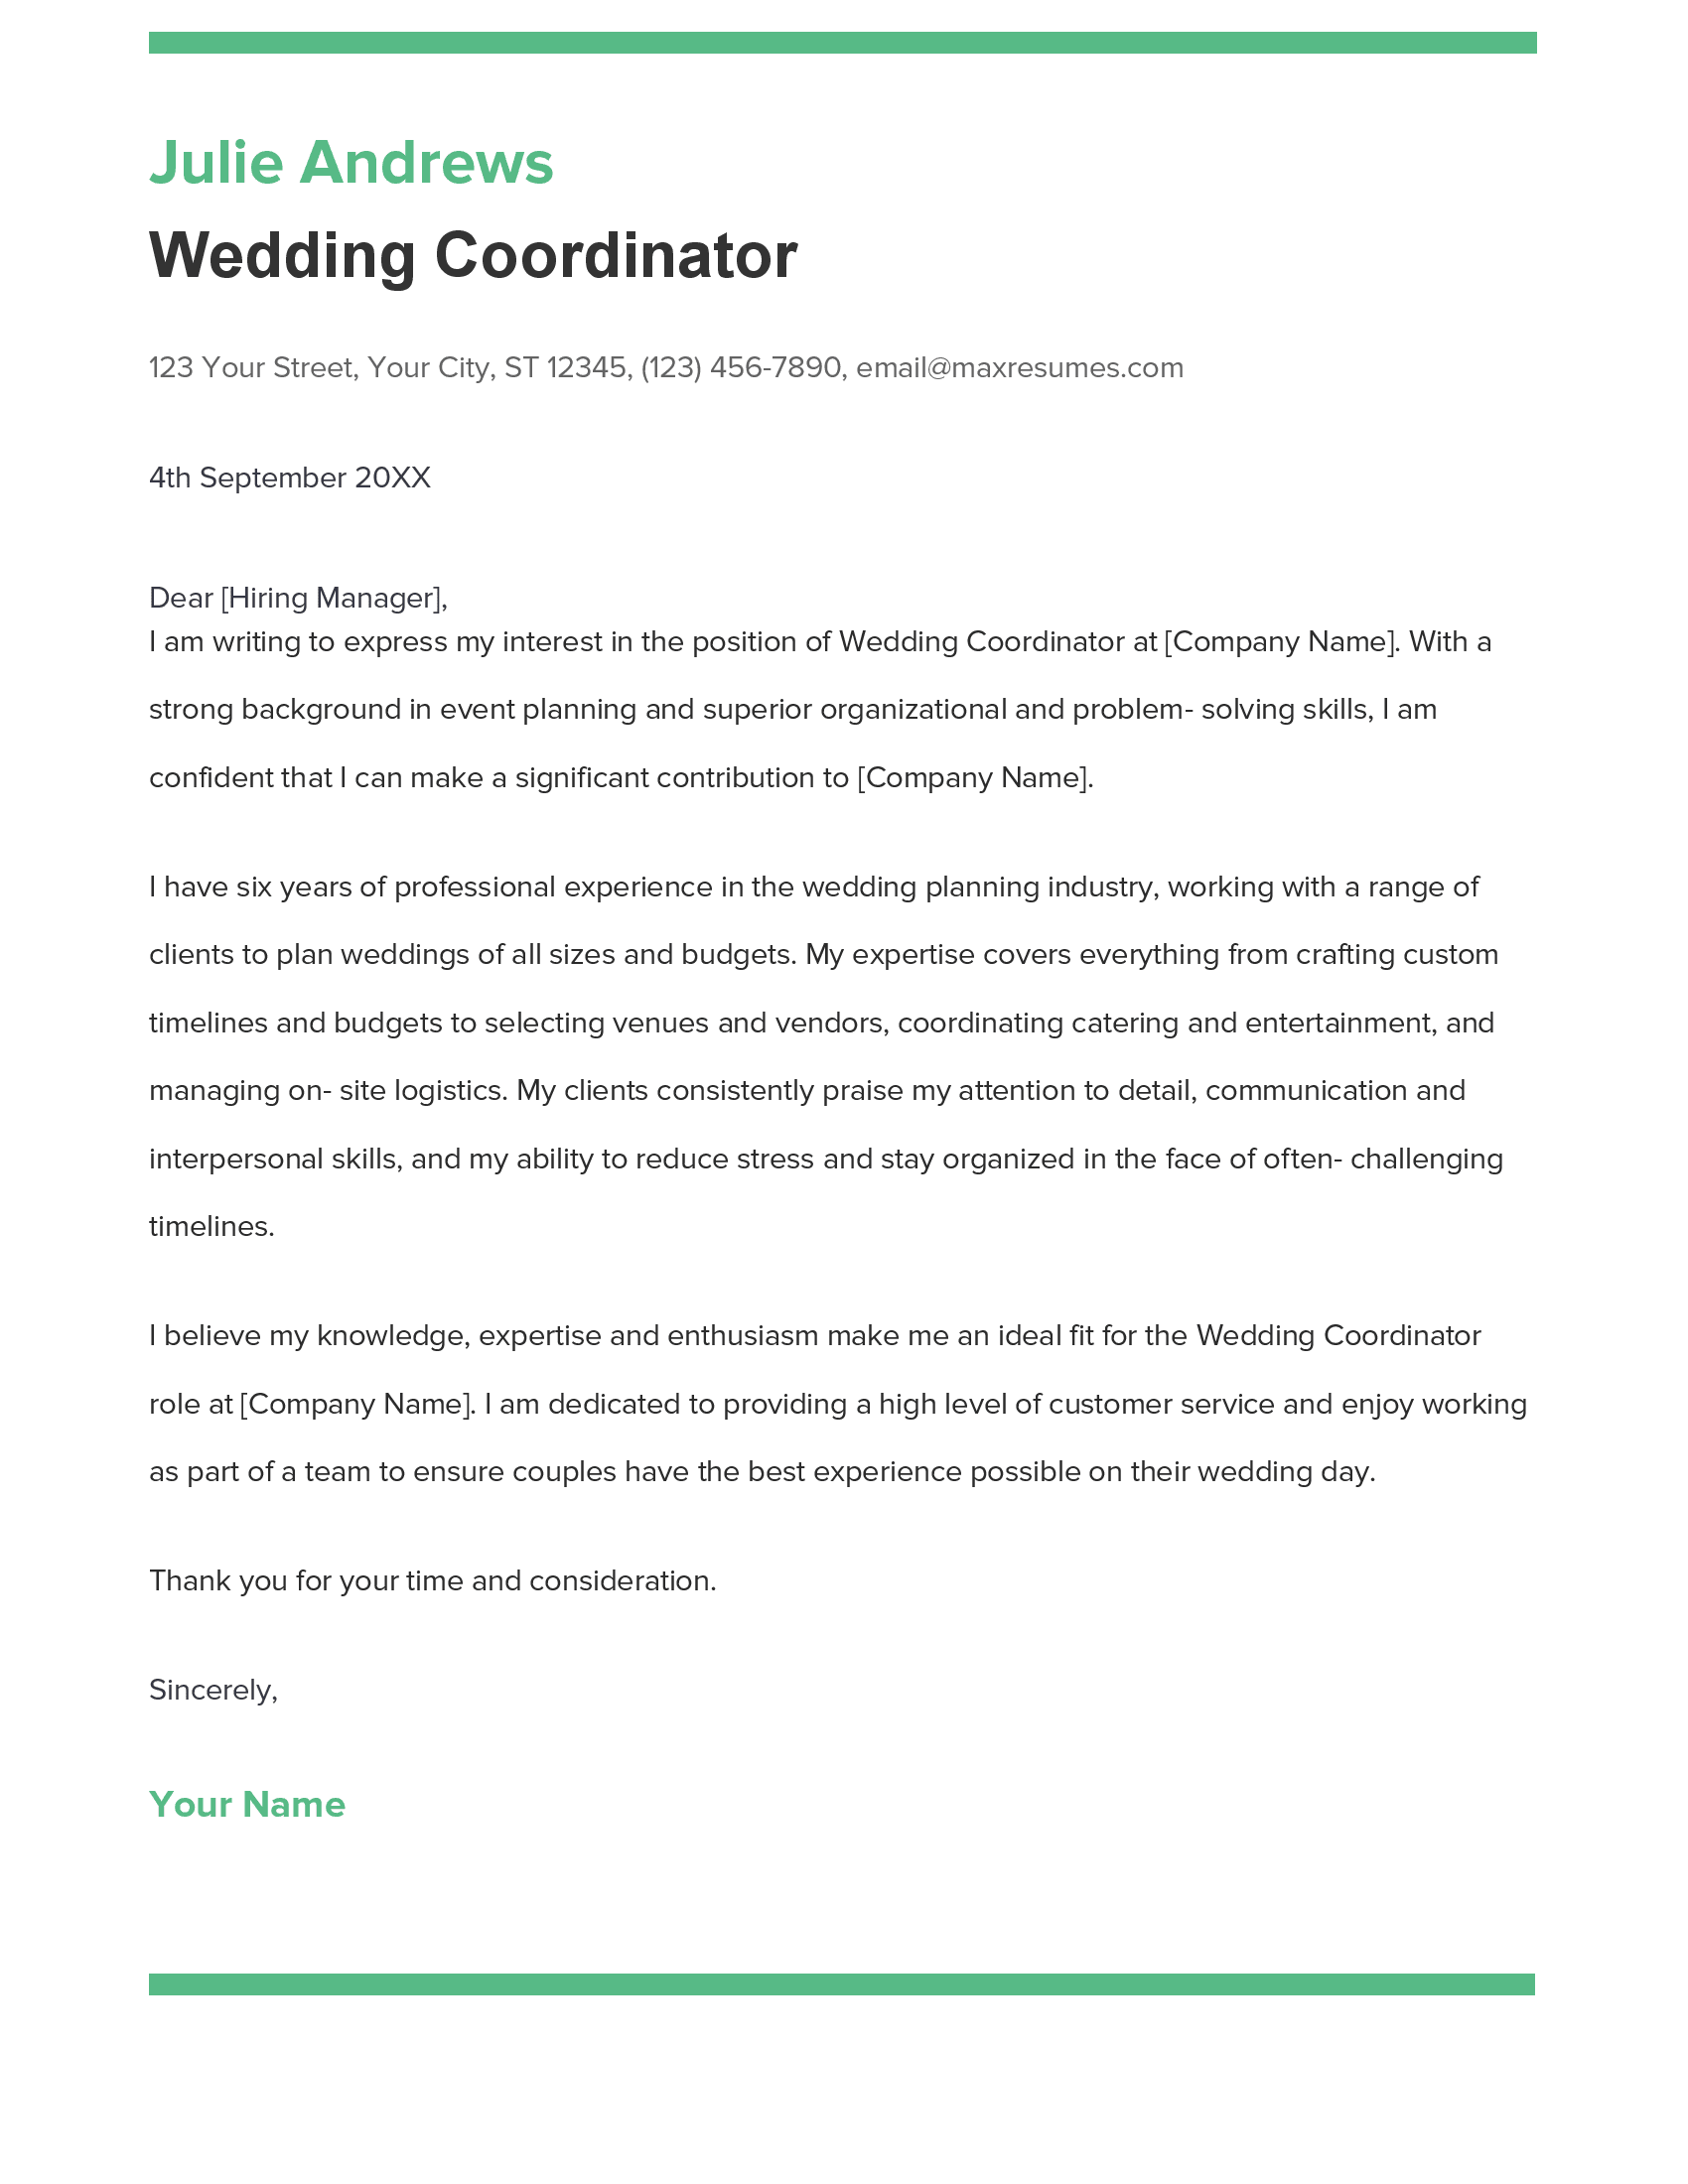 wedding coordinator cover letter